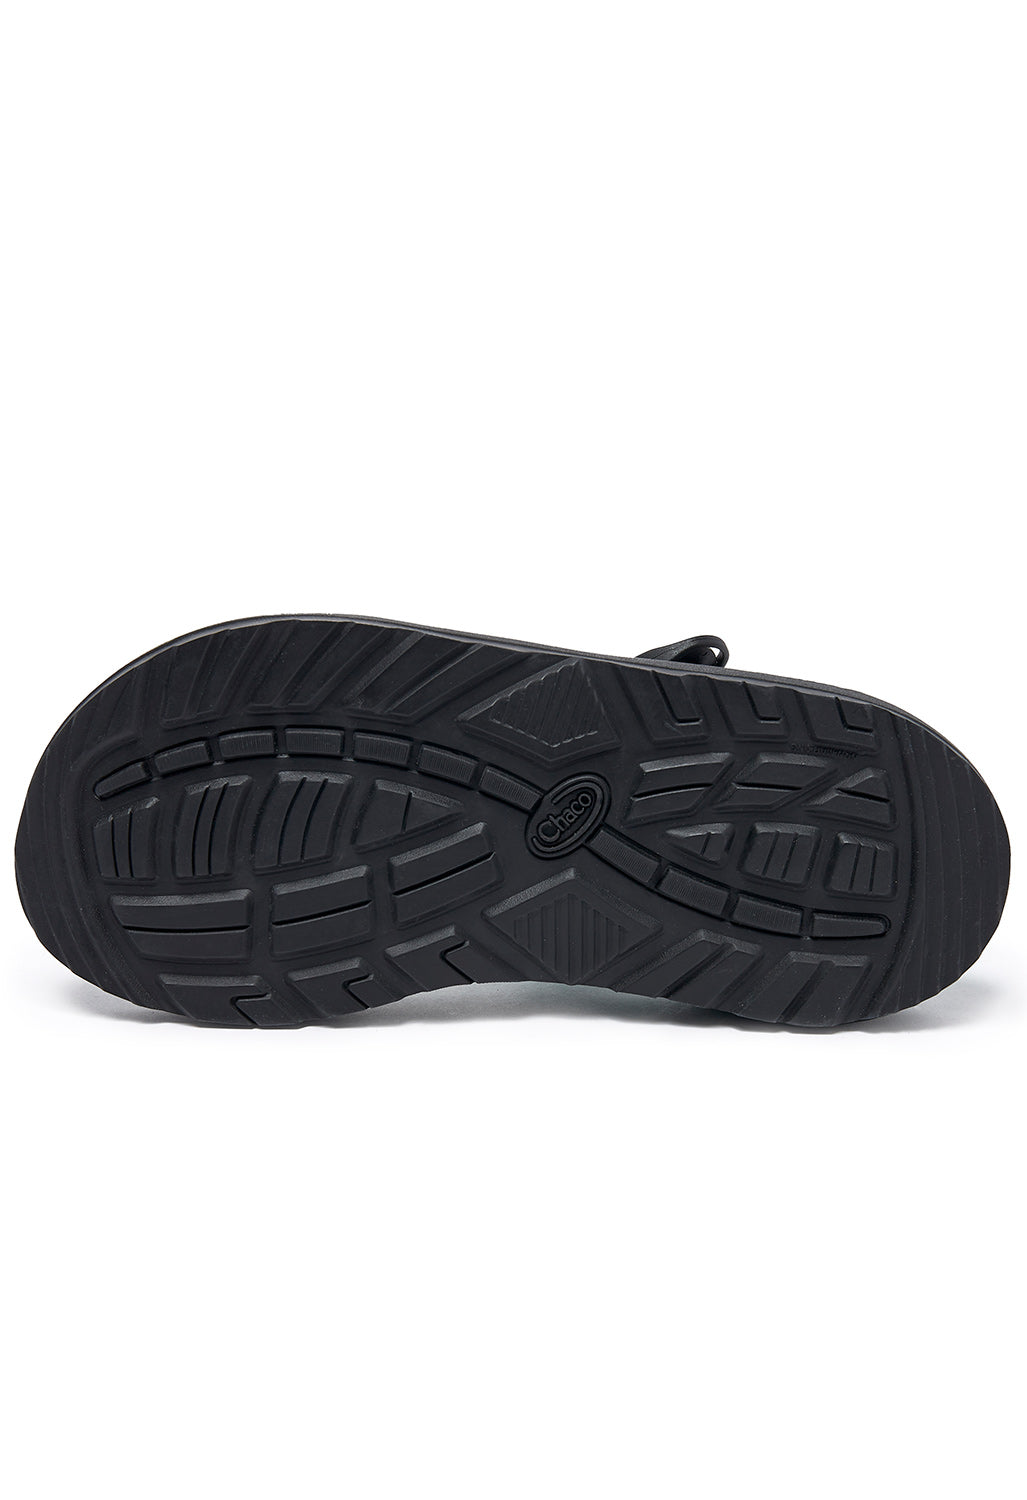 Chaco Men's Z1 Classic Sandals - USA / Jobfish